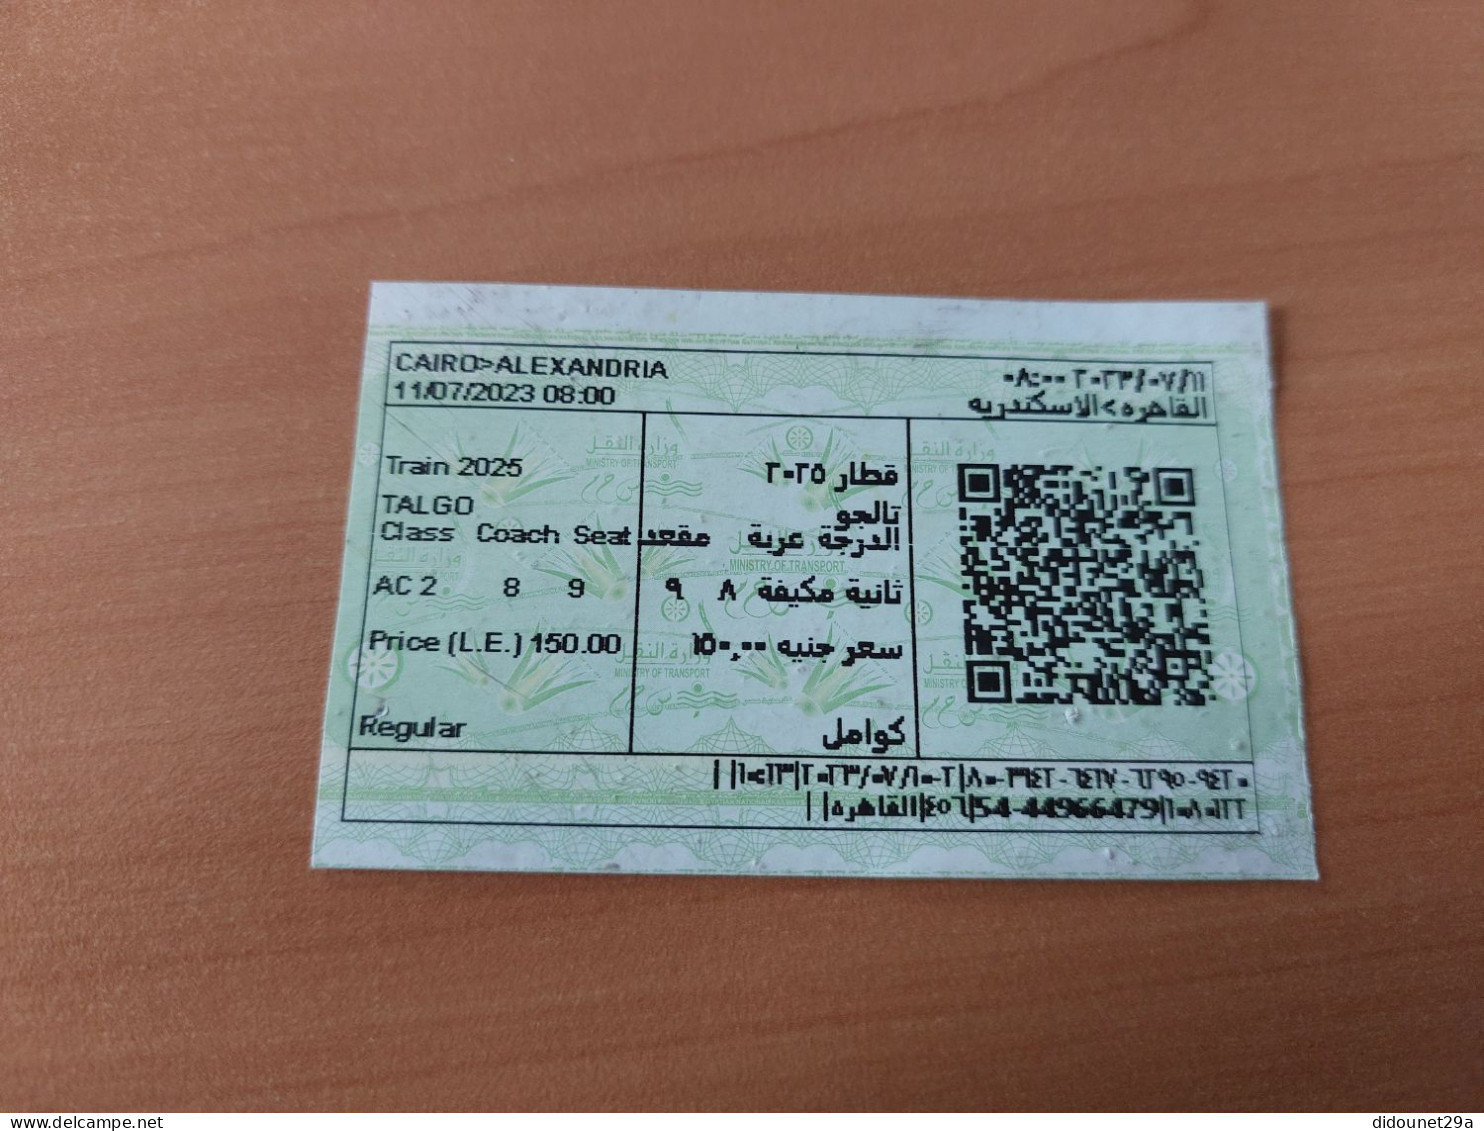 Ticket De Transport (train) "CAIRO - ALEXANDRIA" Egypte - Welt